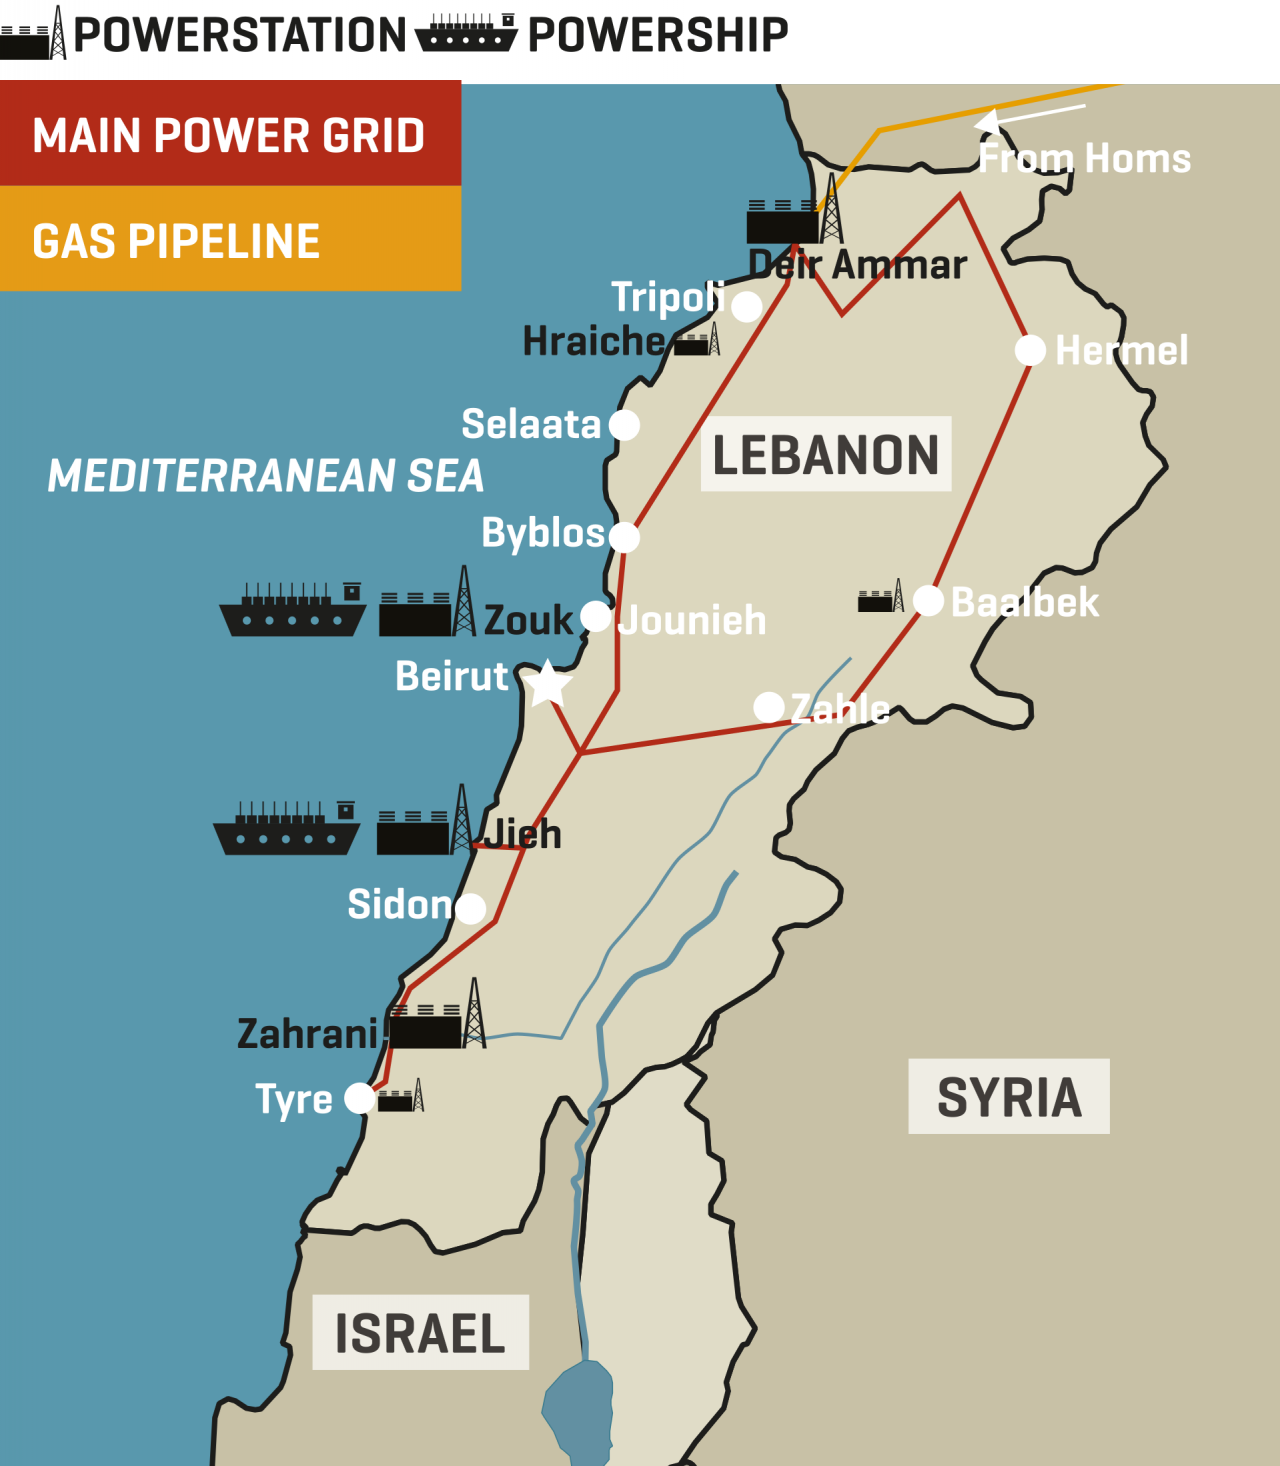 Lebanon’s Power Infrastructure